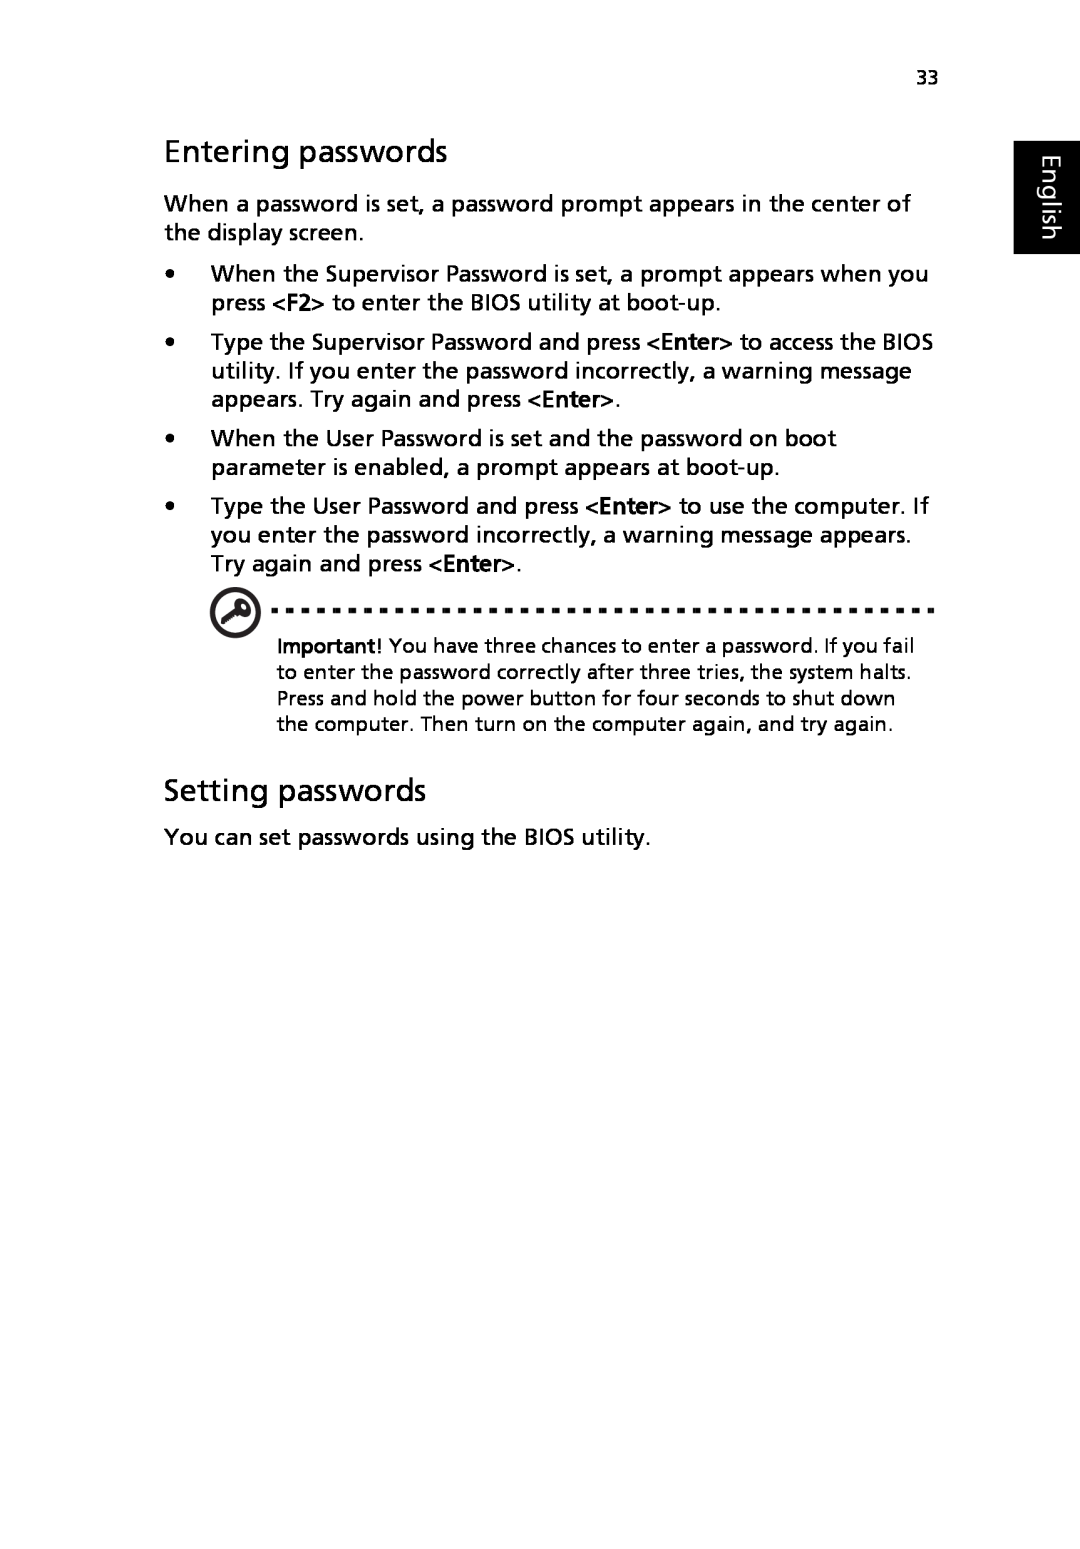 Acer 2310 Series manual Entering passwords, Setting passwords, English 